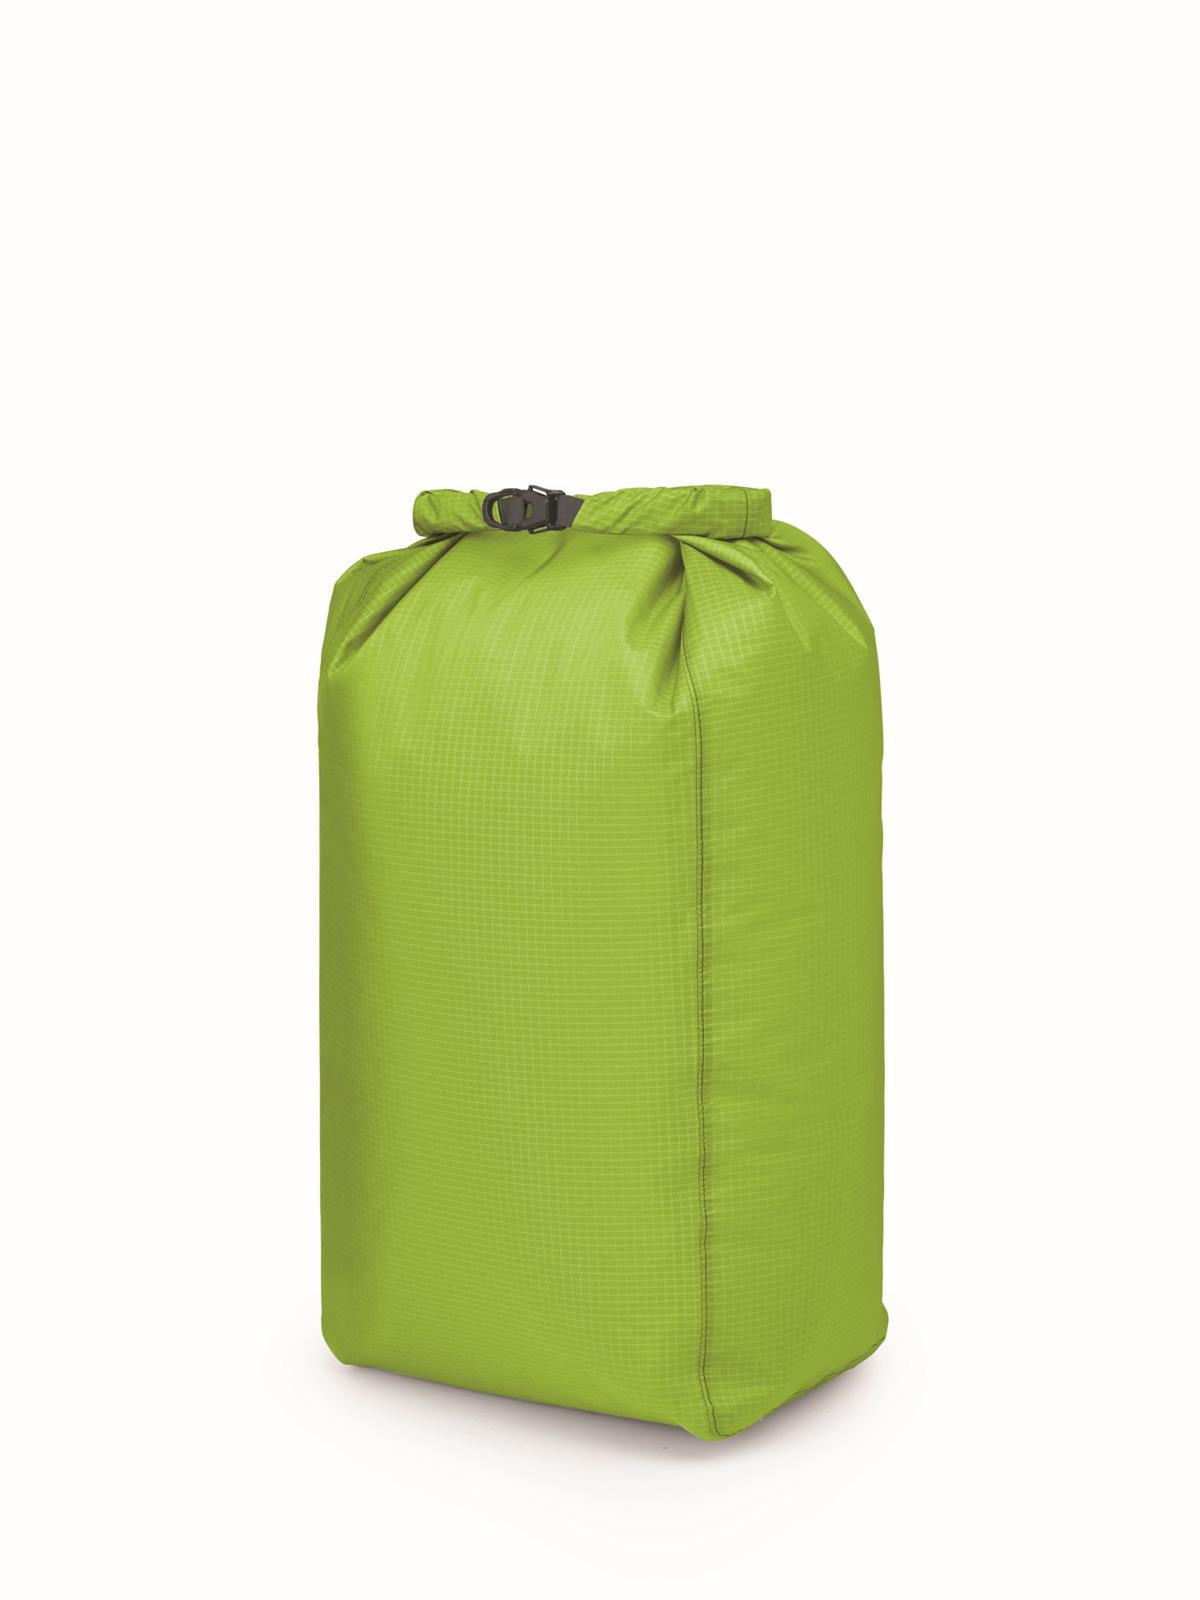 OSPREY Dry Sack 35 Window Limon Green (10004951)